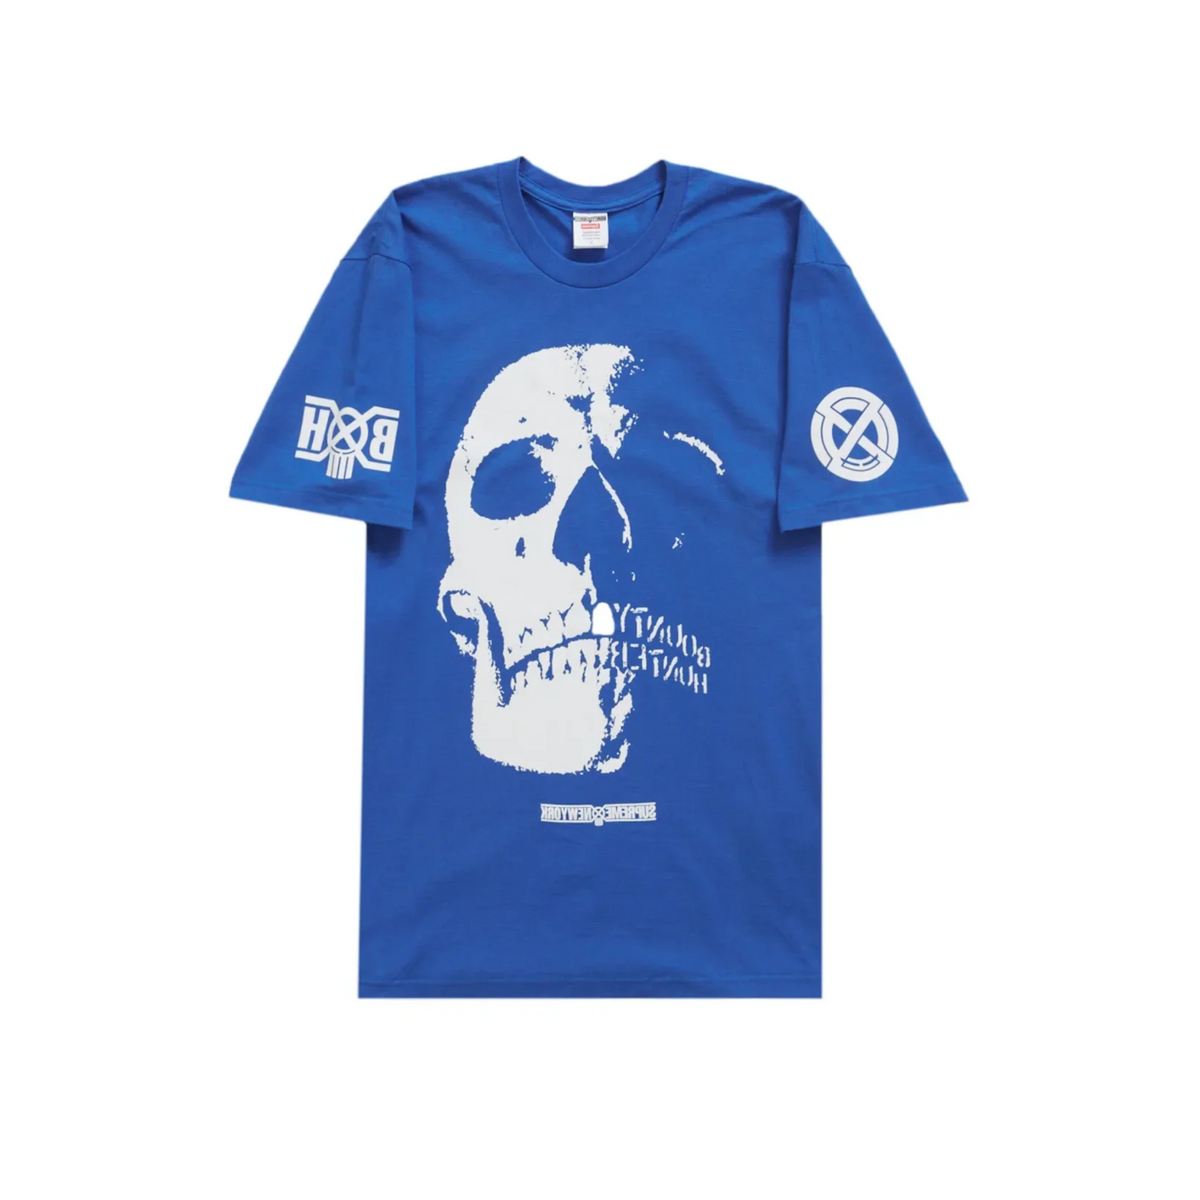 Supreme Bounty Hunter Skulls T-shirt "Blue"